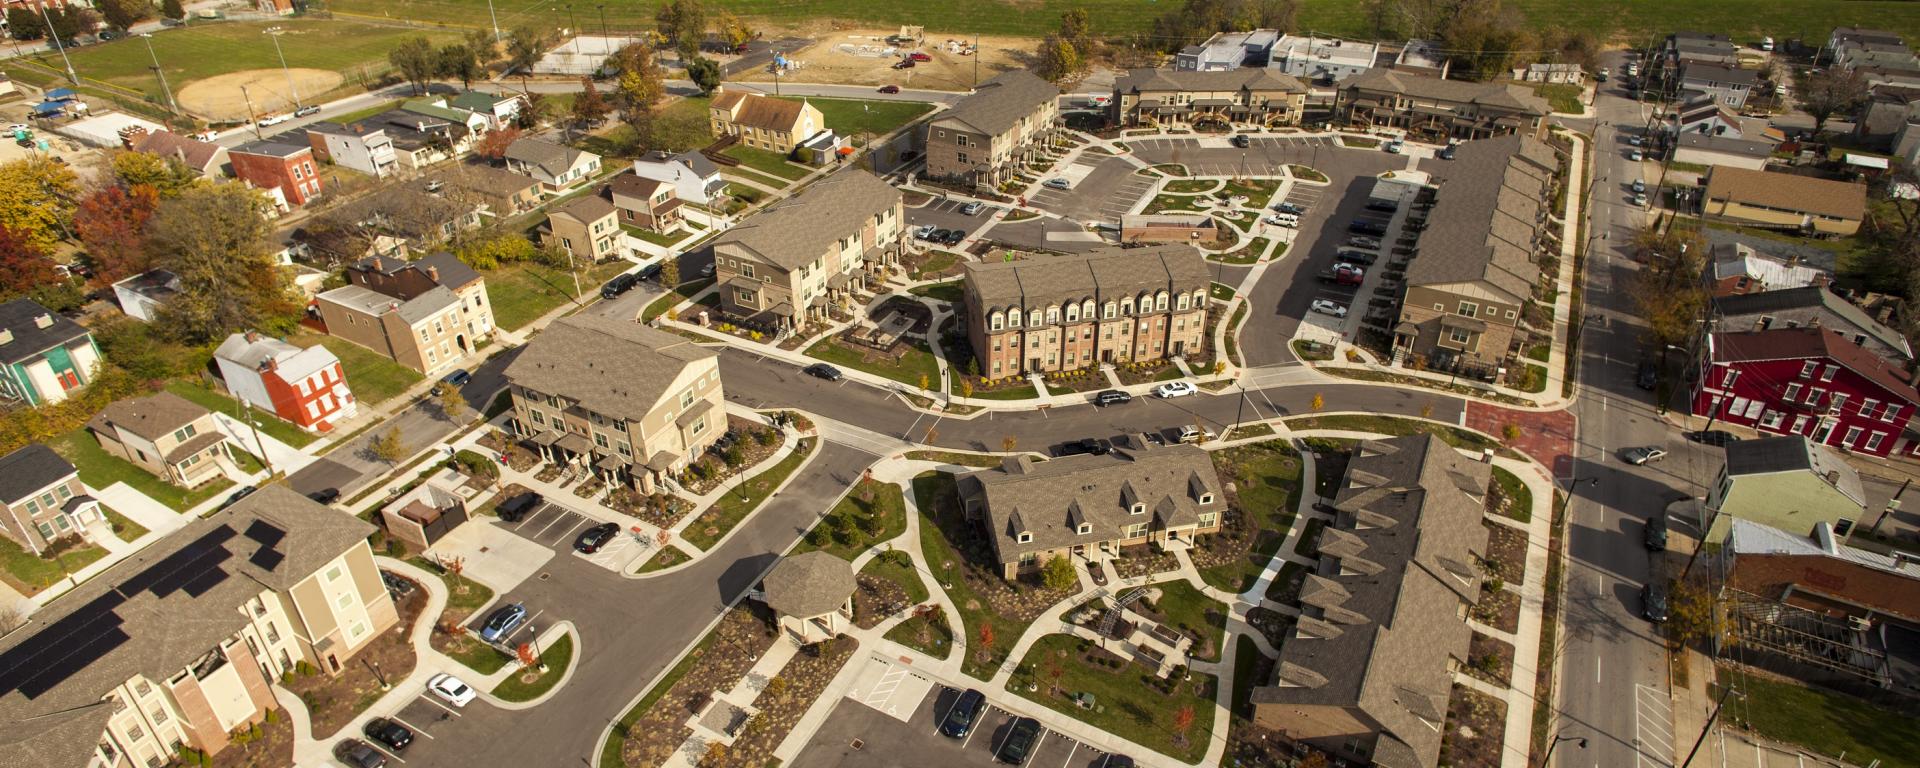 aerial image of housing development 